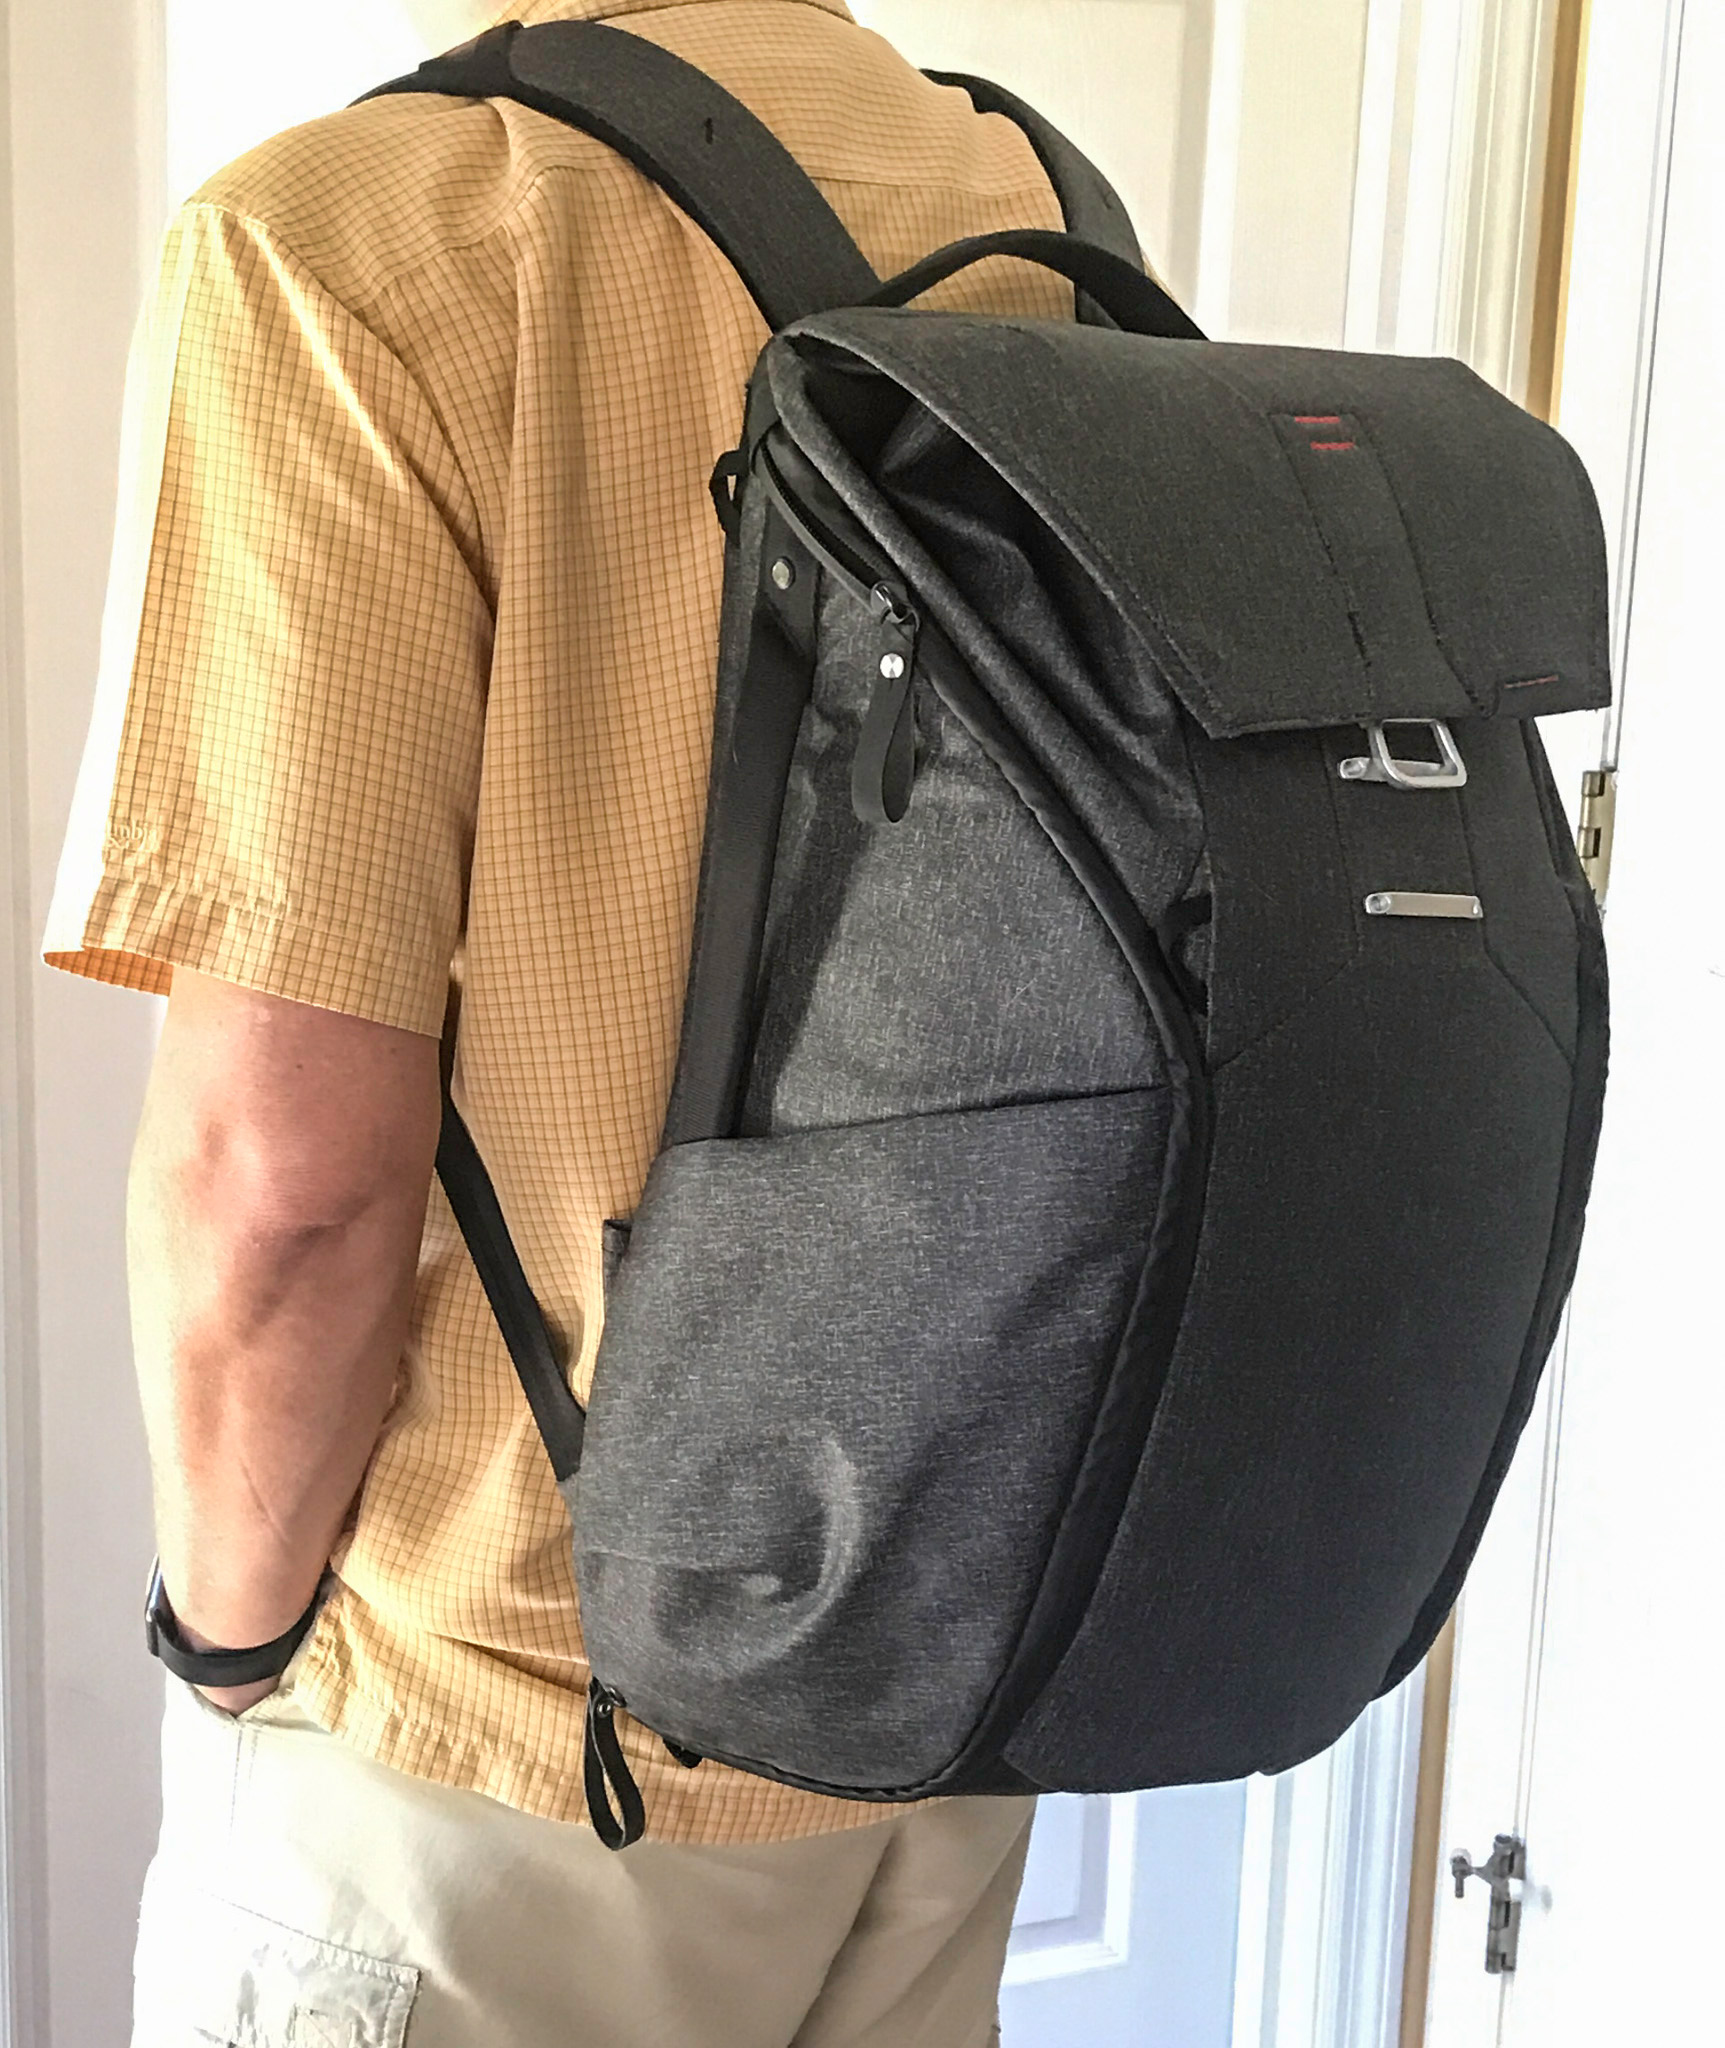 Peak Design's Everyday Backpack 30L